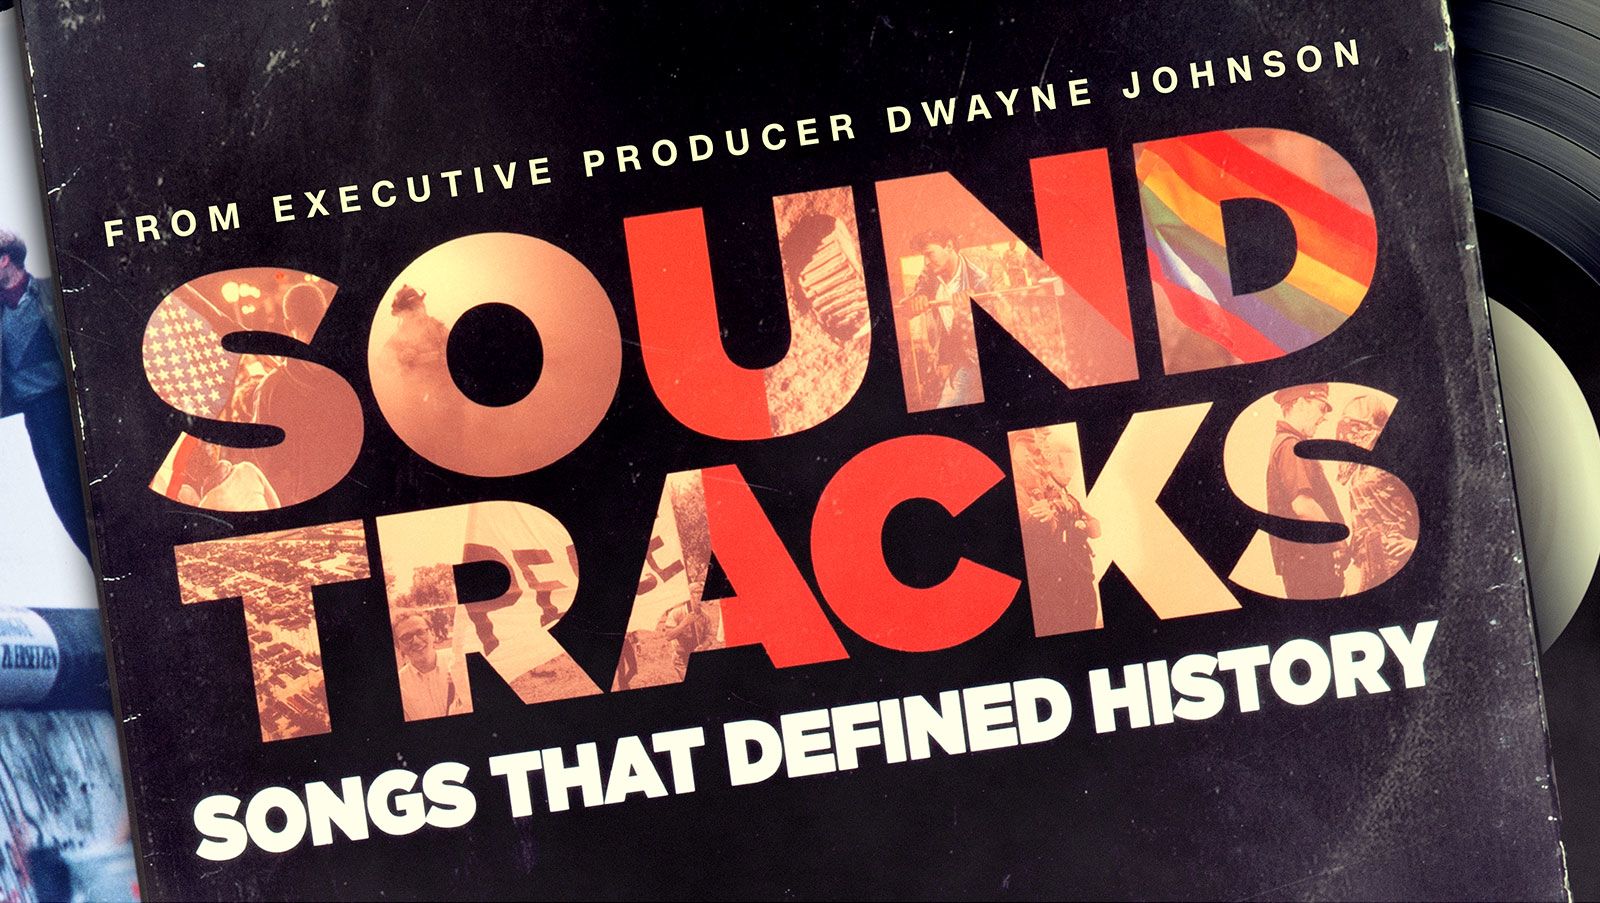 Soundtracks  CNN Creative Marketing